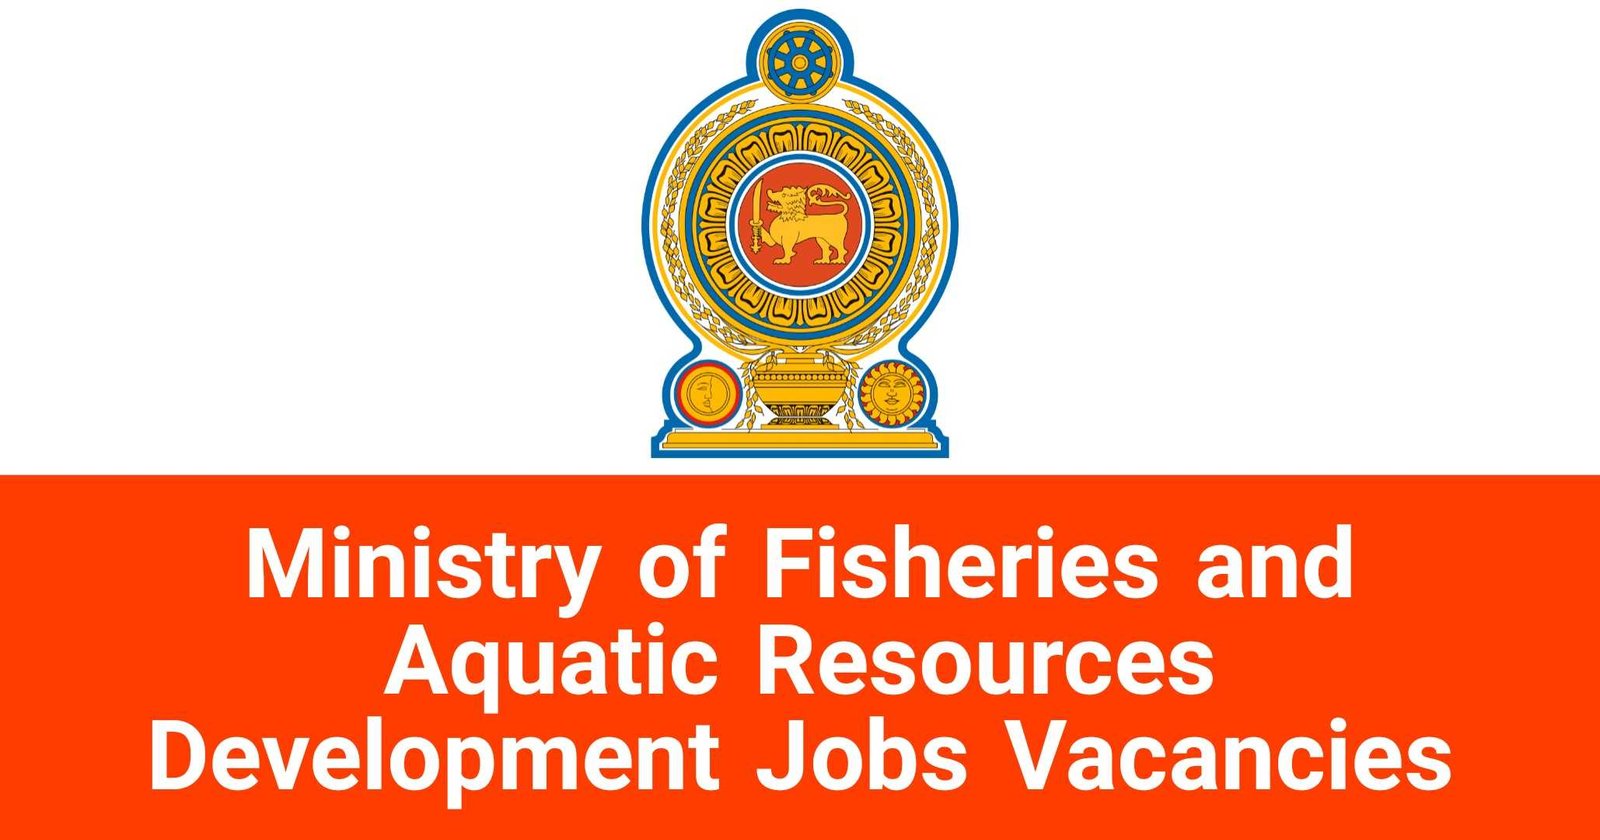 Ministry of Fisheries and Aquatic Resources Development Jobs Vacancies Careers